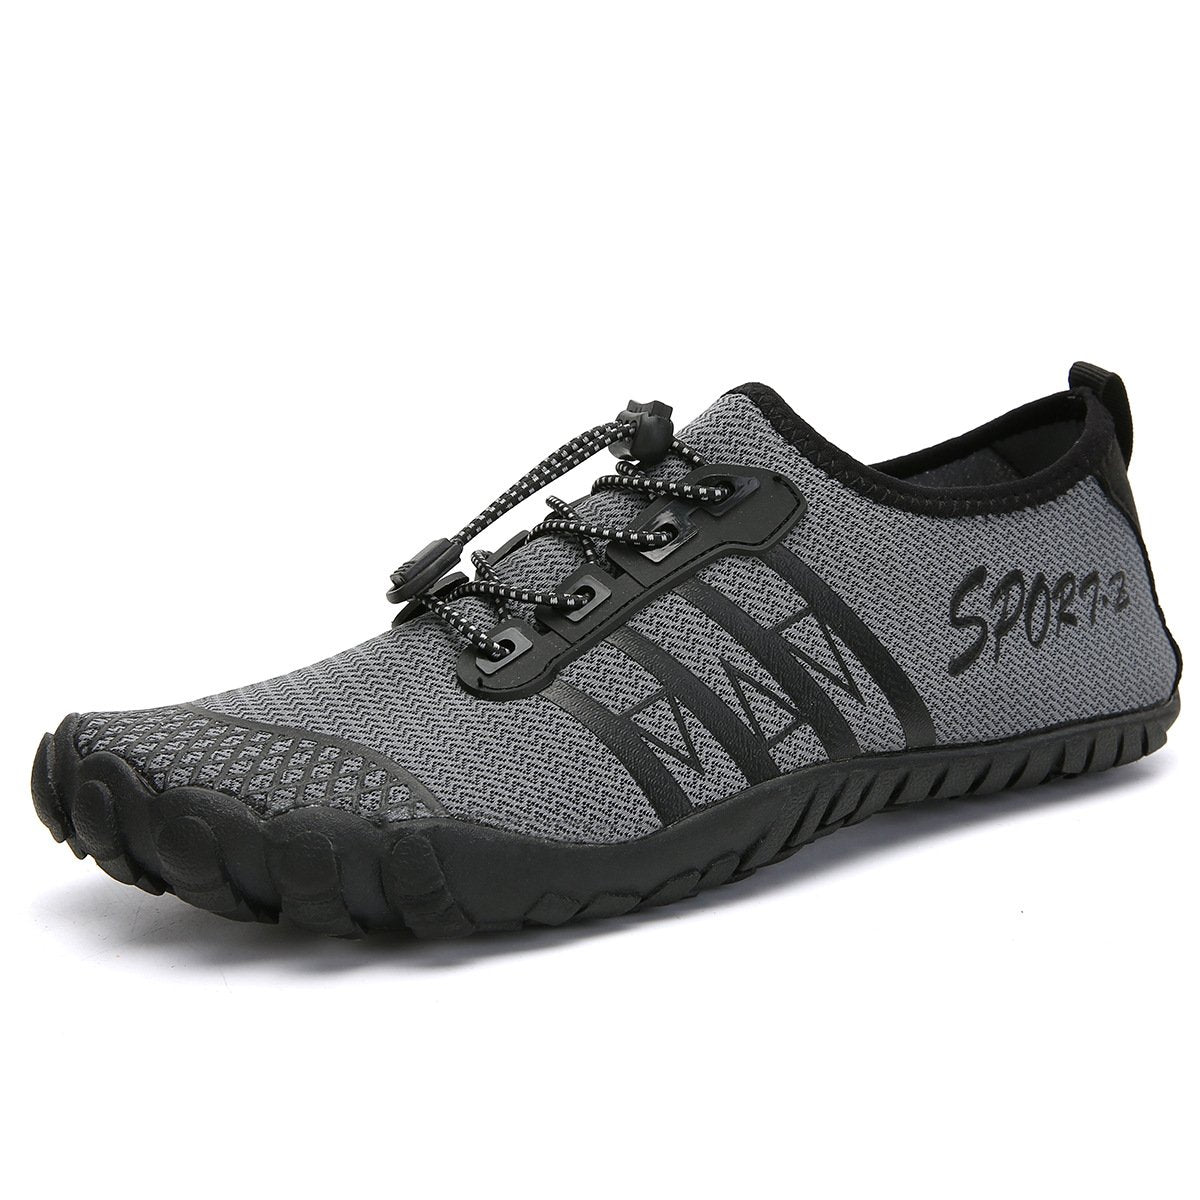 Men's Footwear Climbing Trekking Sneakers Non-slip Slip-on Beach Wading Shoes